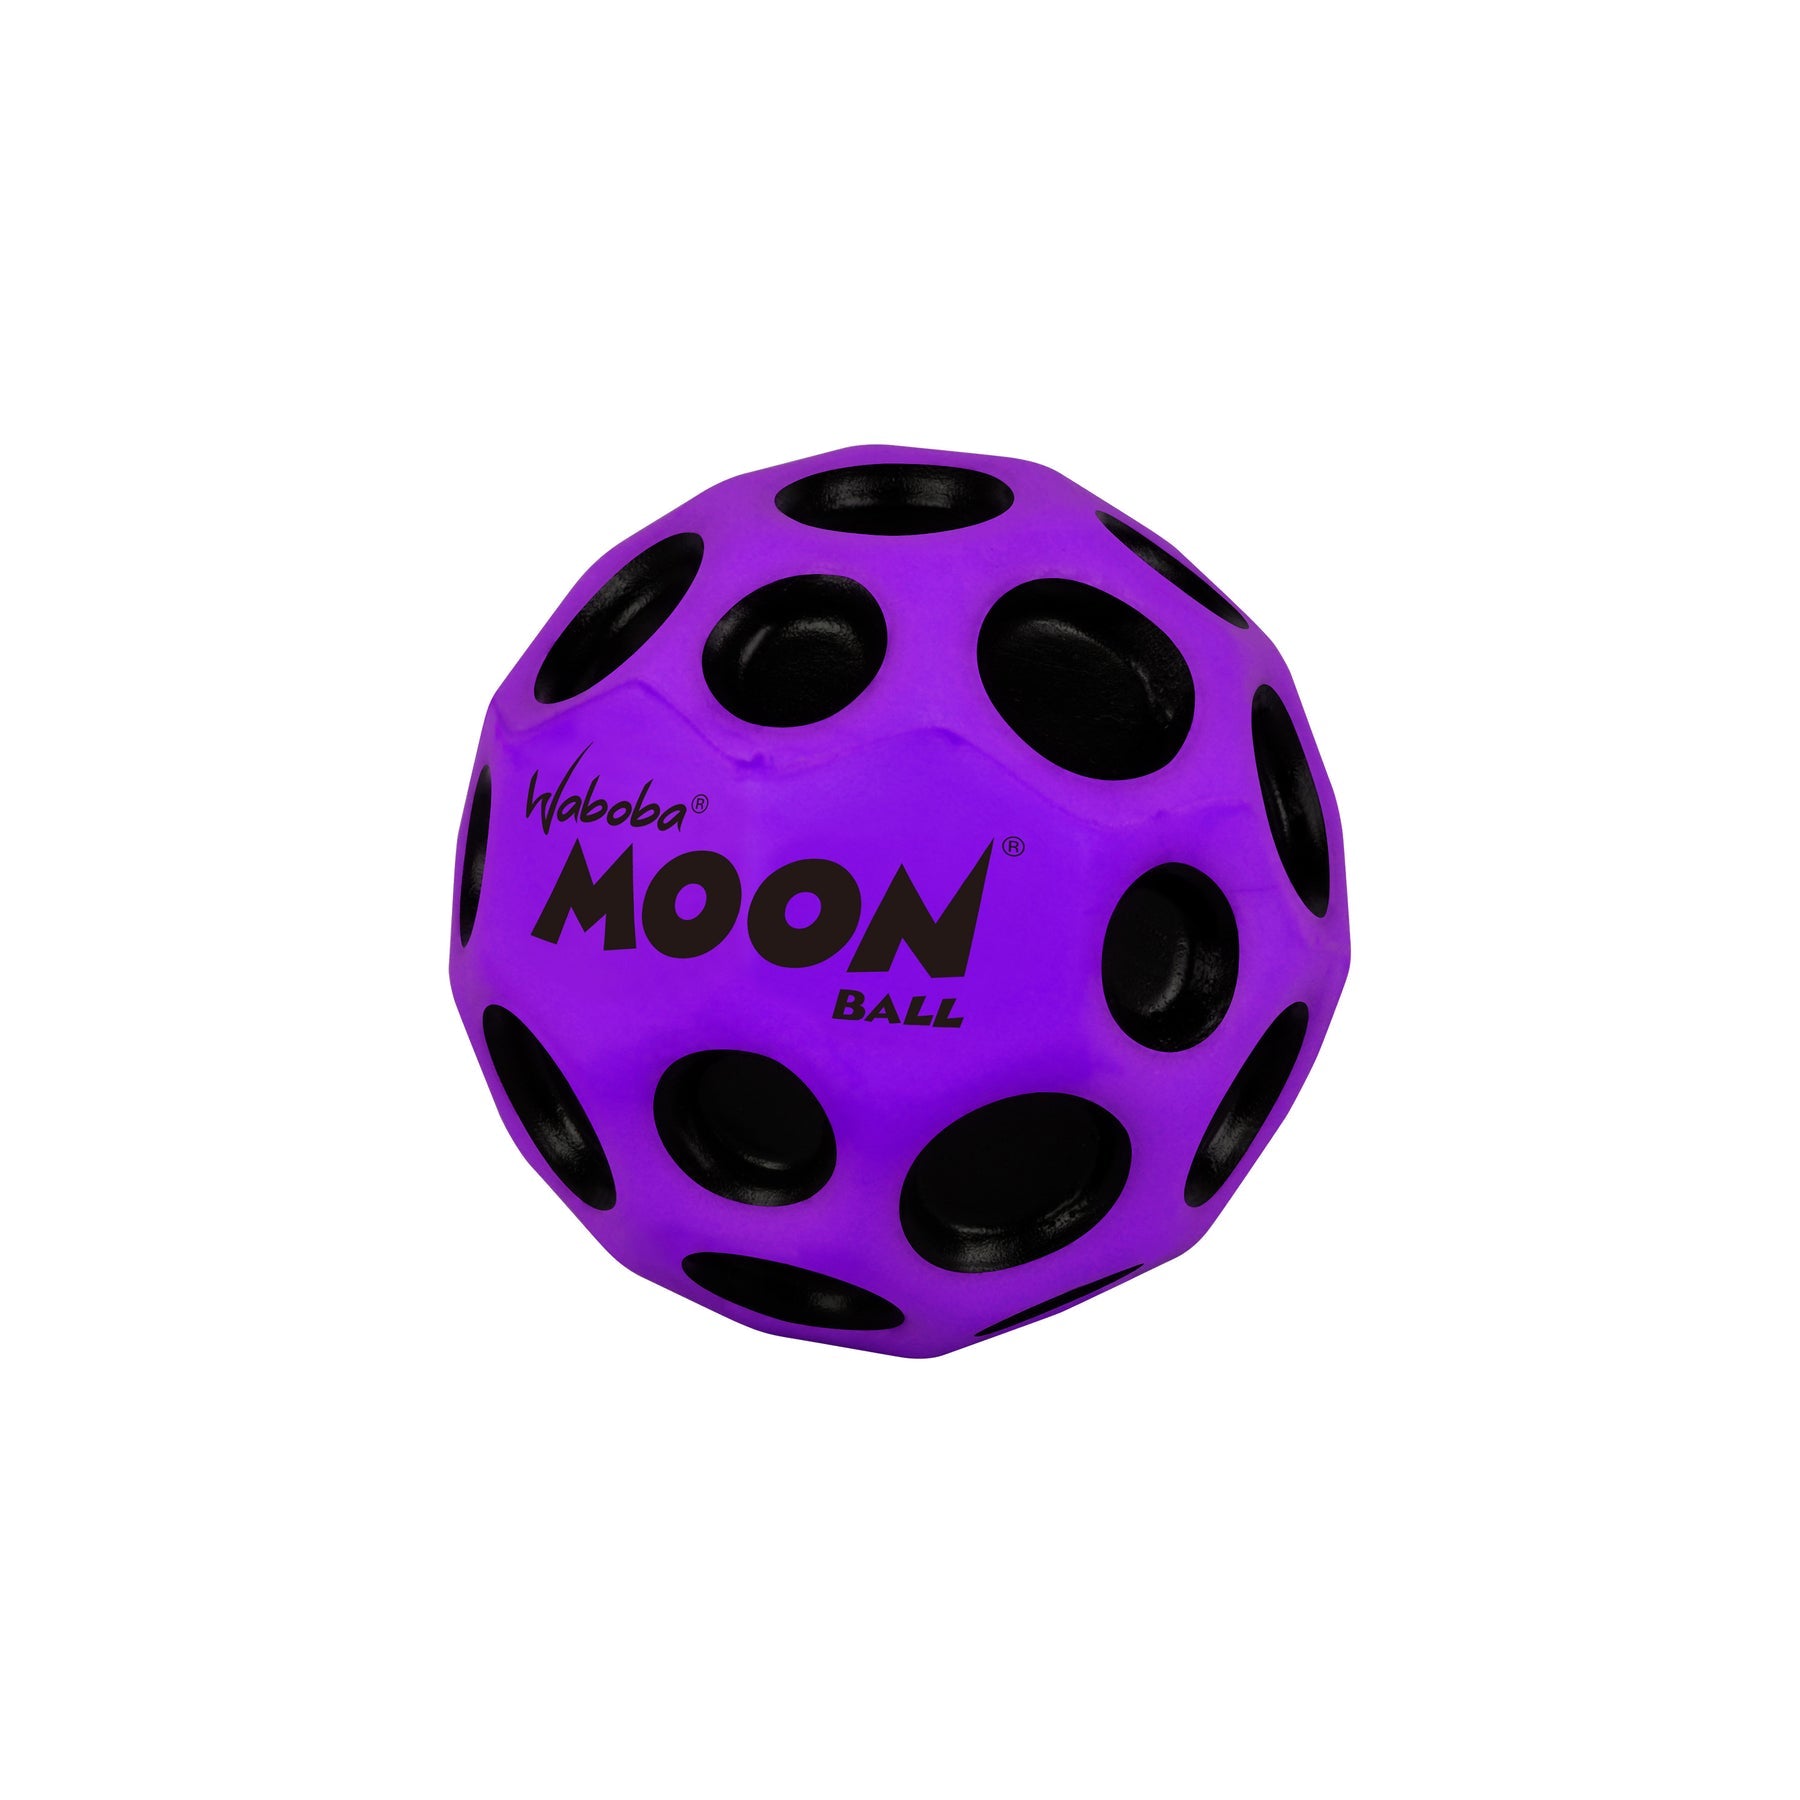 Waboba Moon Ball (Single) - Assorted Colors    